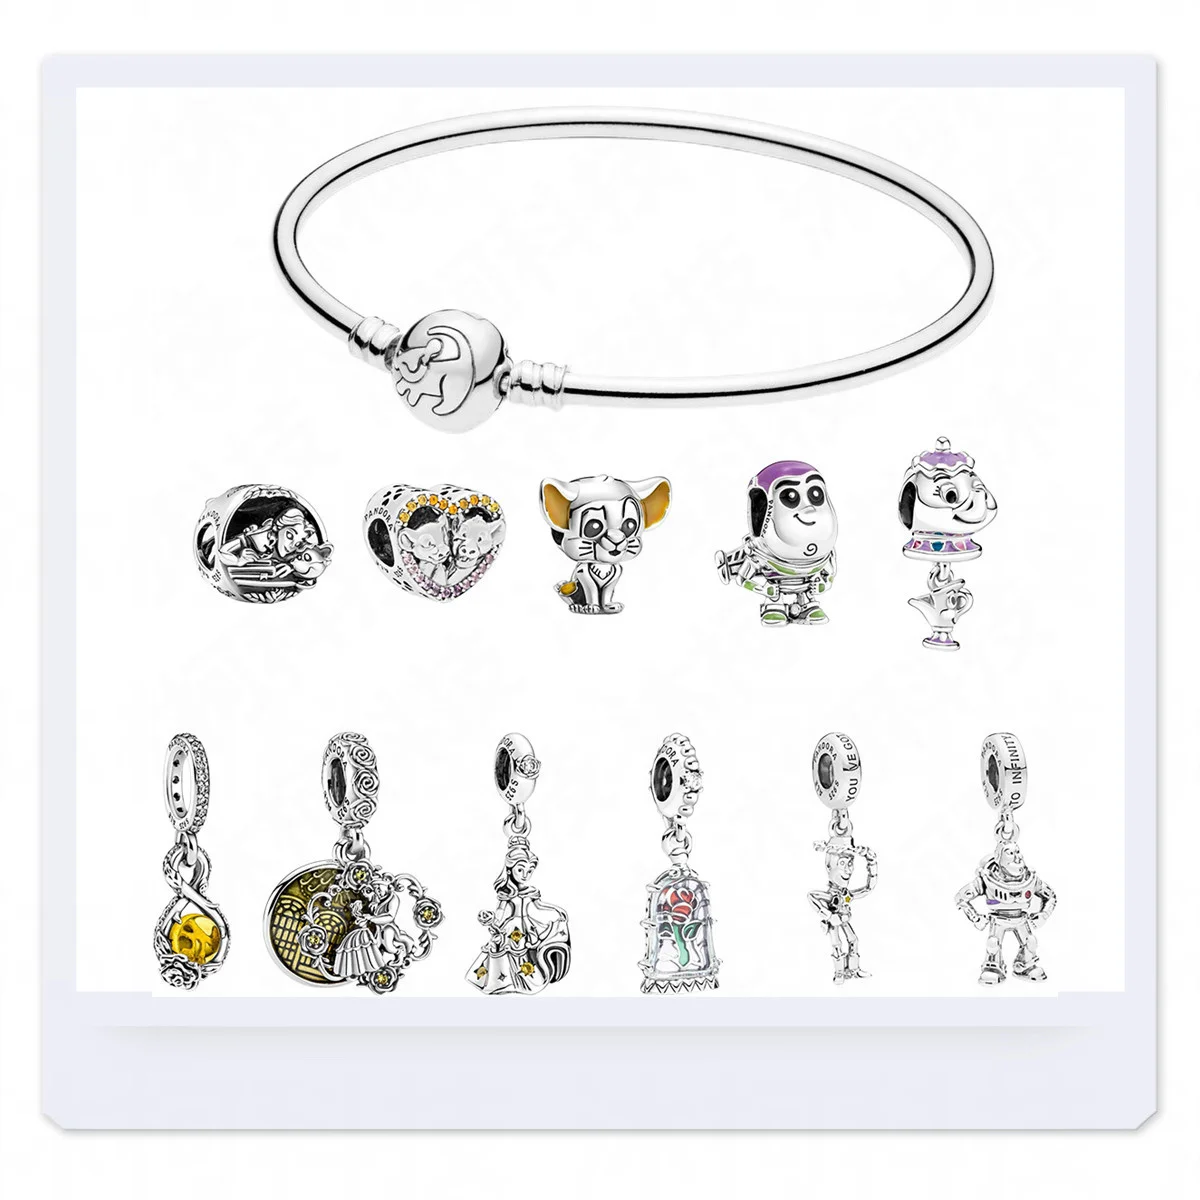 2022 New Arrival Charms for Pandora Jewelry Bracelet Beads Apple Frozen Olaf Elsa Simba Bella Bestia in Bulk Women DIY BOY Gift